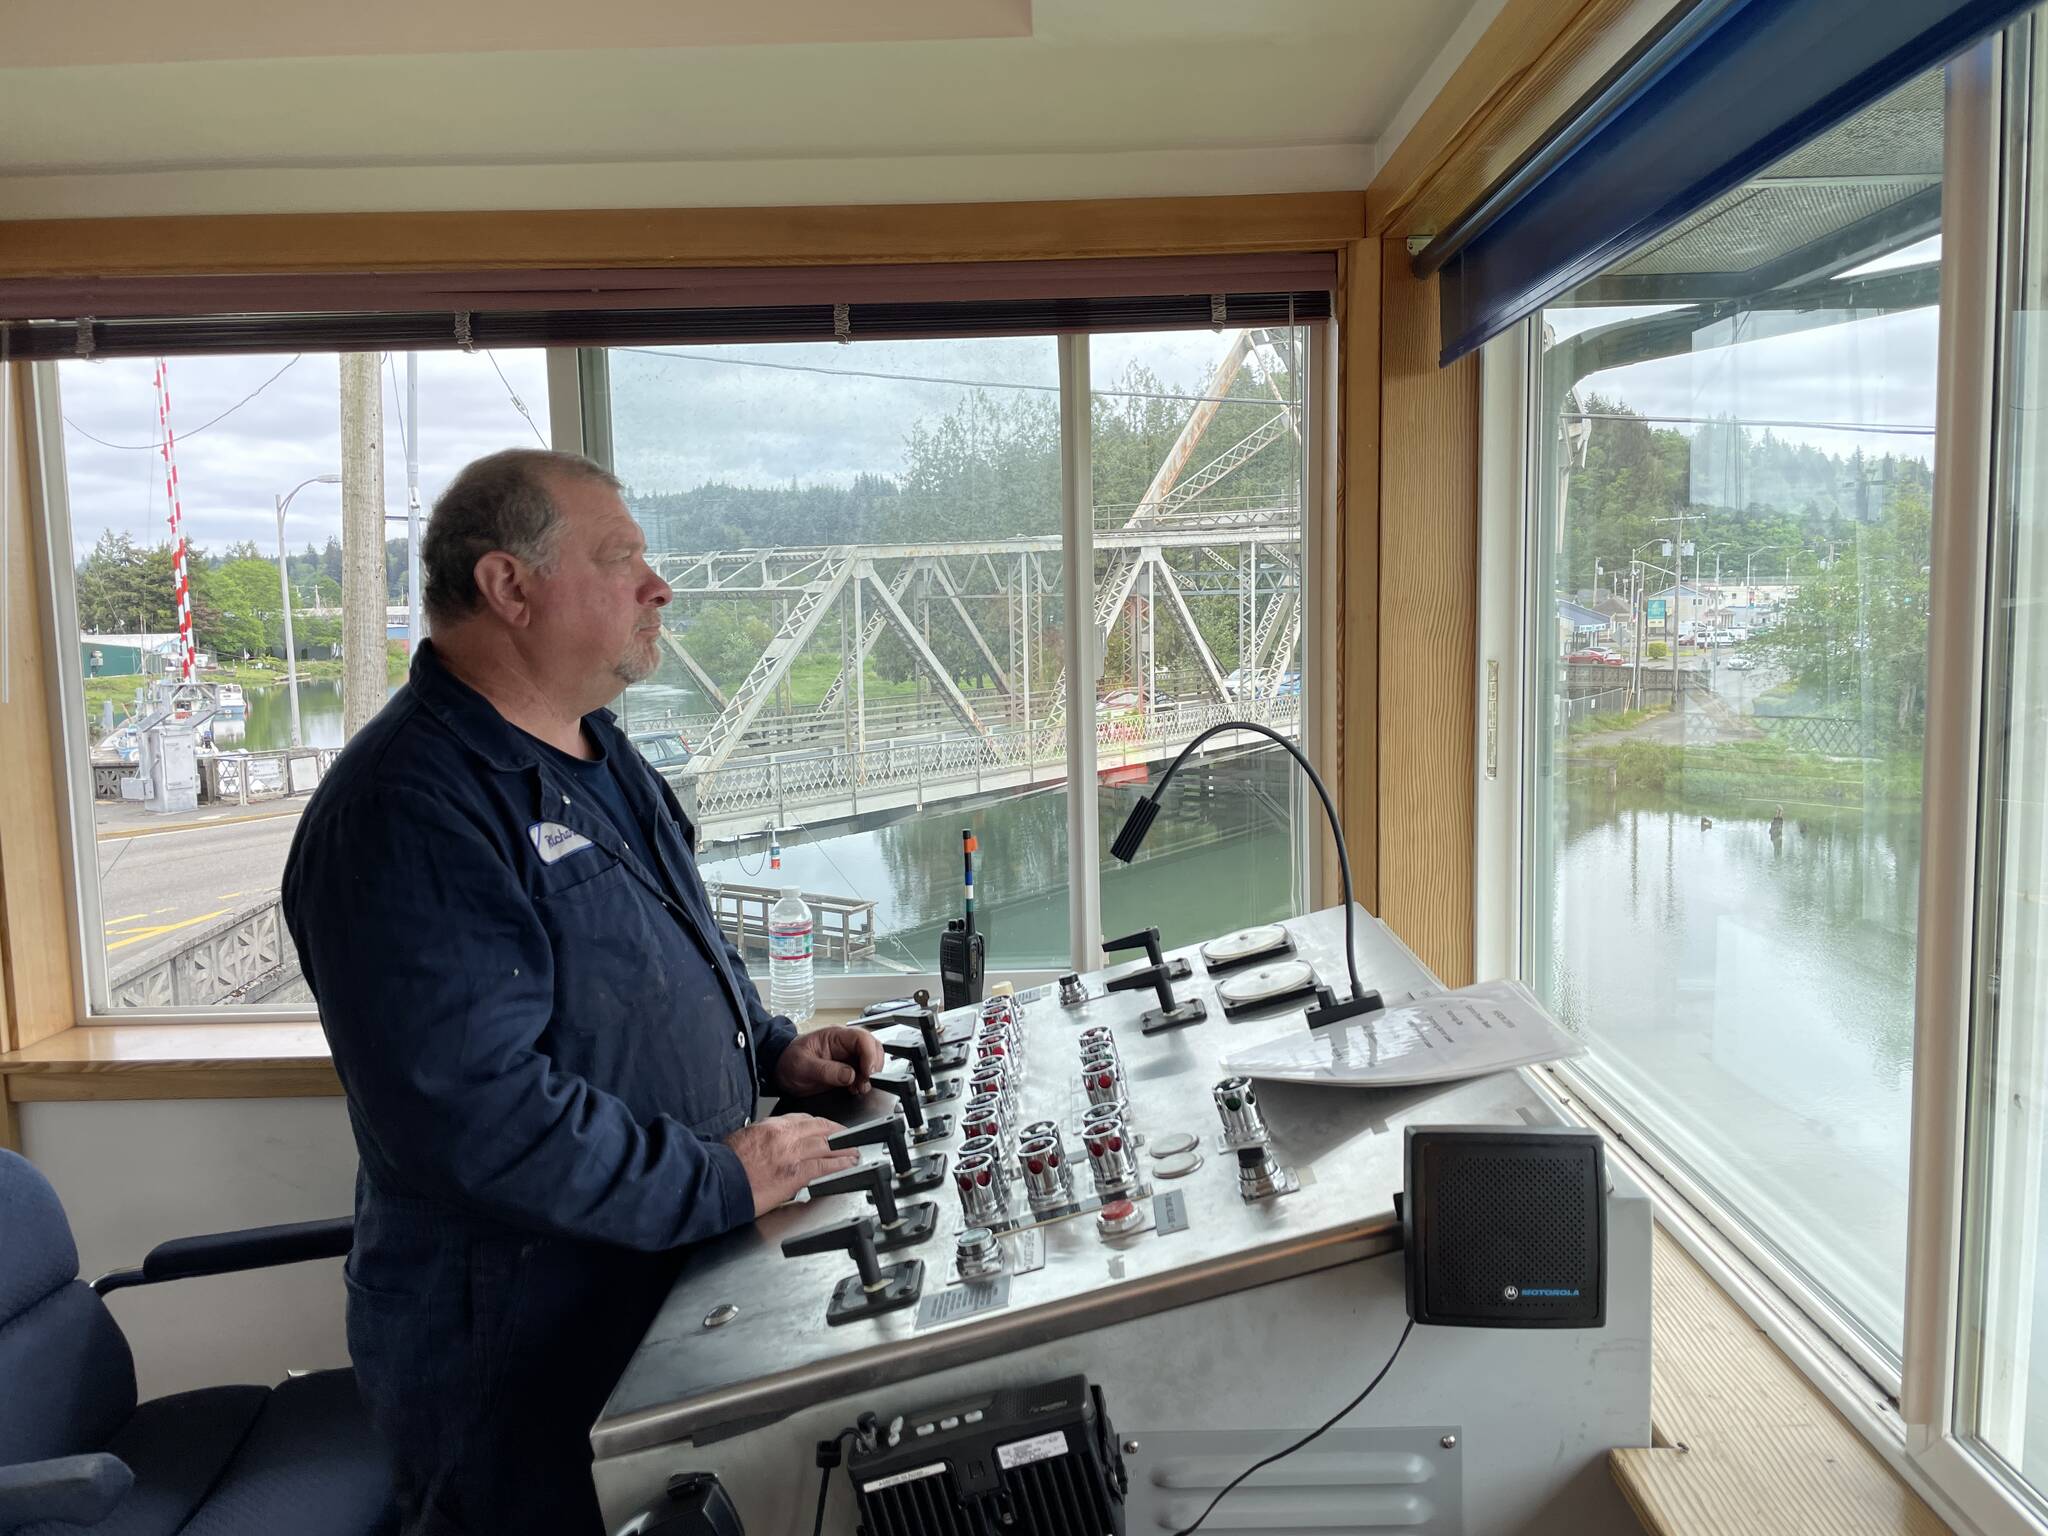 Michael S. Lockett / The Daily World
Bridge specialist Richard Chamberlain of the Washington State Department of Transportation opens the Heron Street Bridge during a maintenance inspection on May 16.